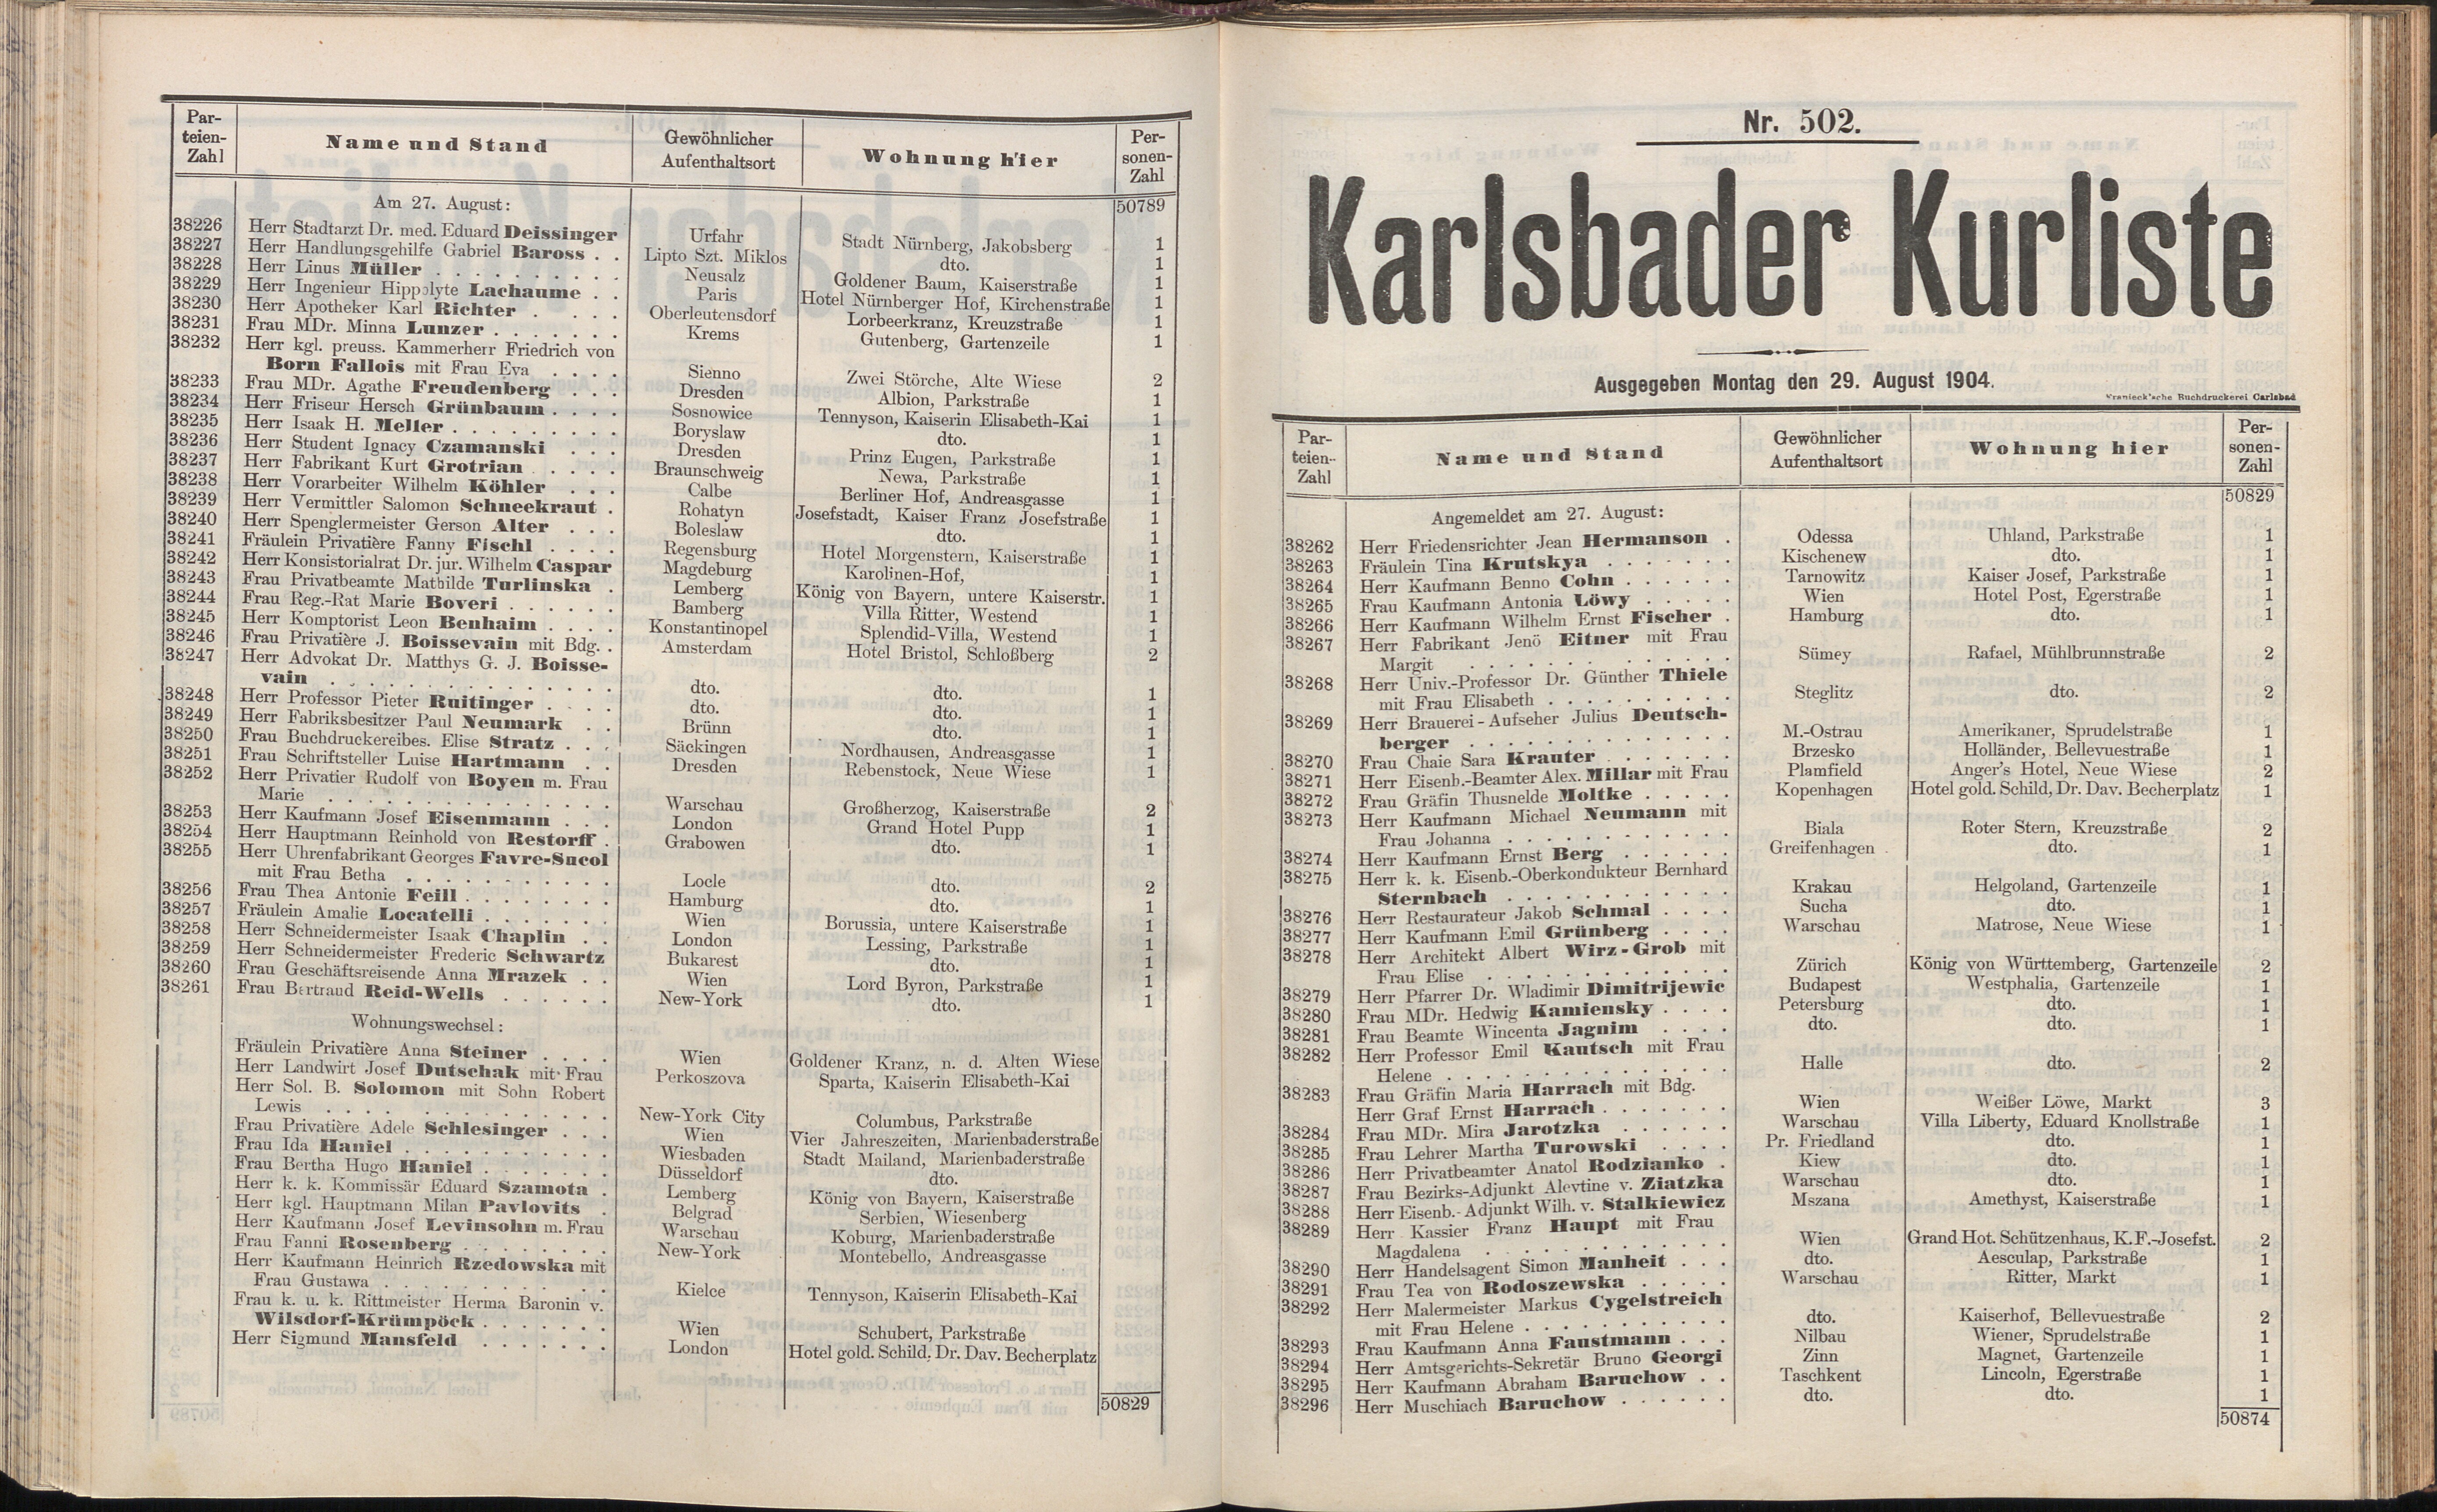 524. soap-kv_knihovna_karlsbader-kurliste-1904_5250